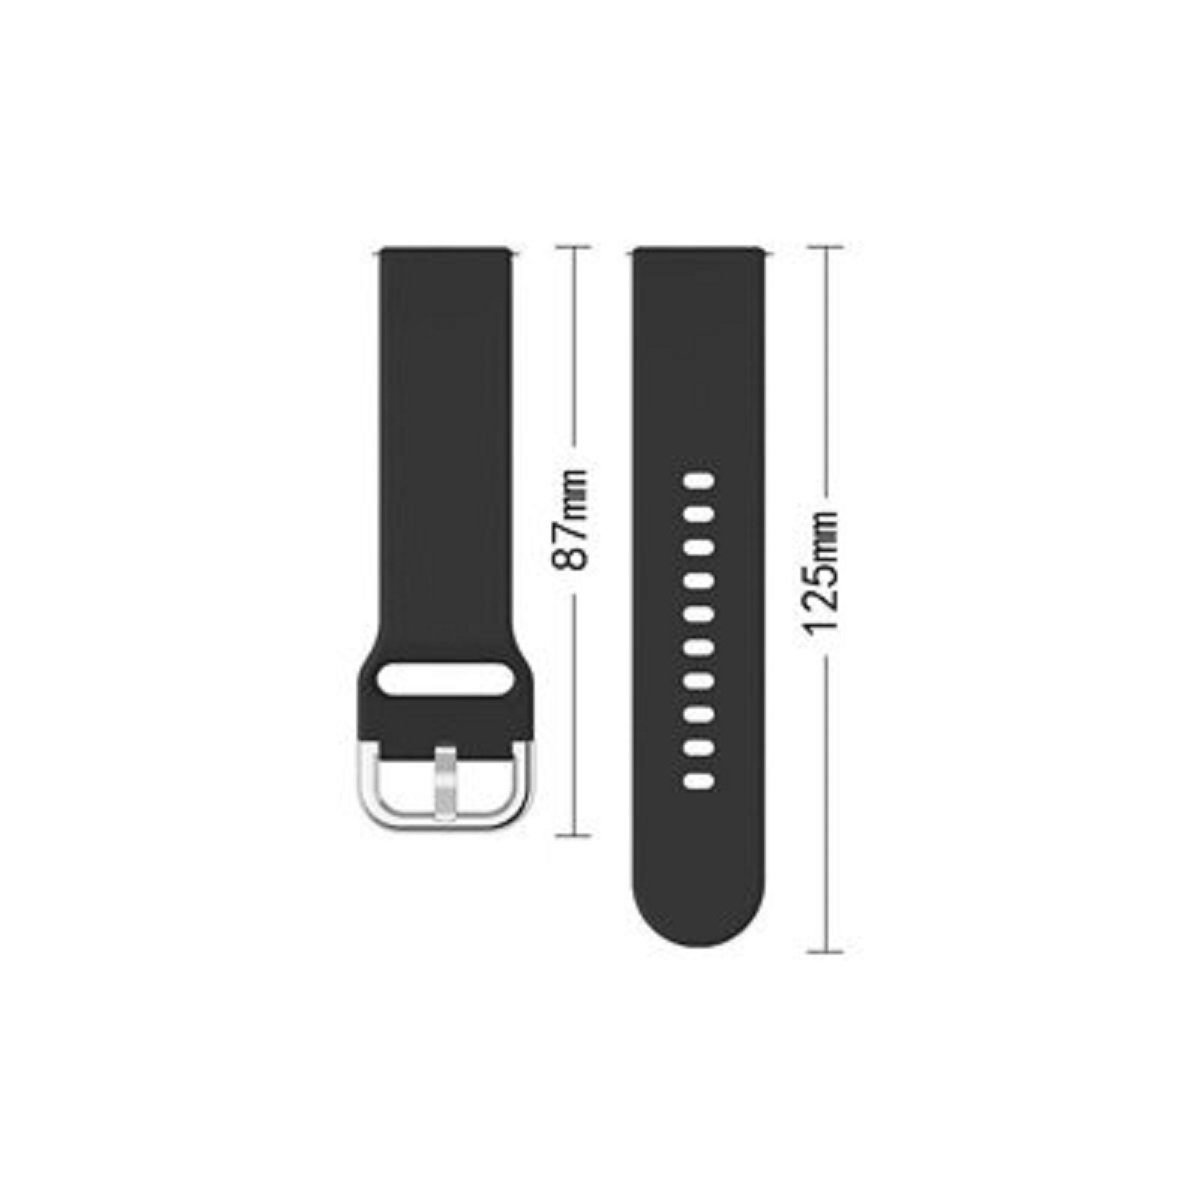 Smartwatch-Armband Silikonarmband Breite 22mm universal Ersatz Hurtel Grau Uhrenarmband